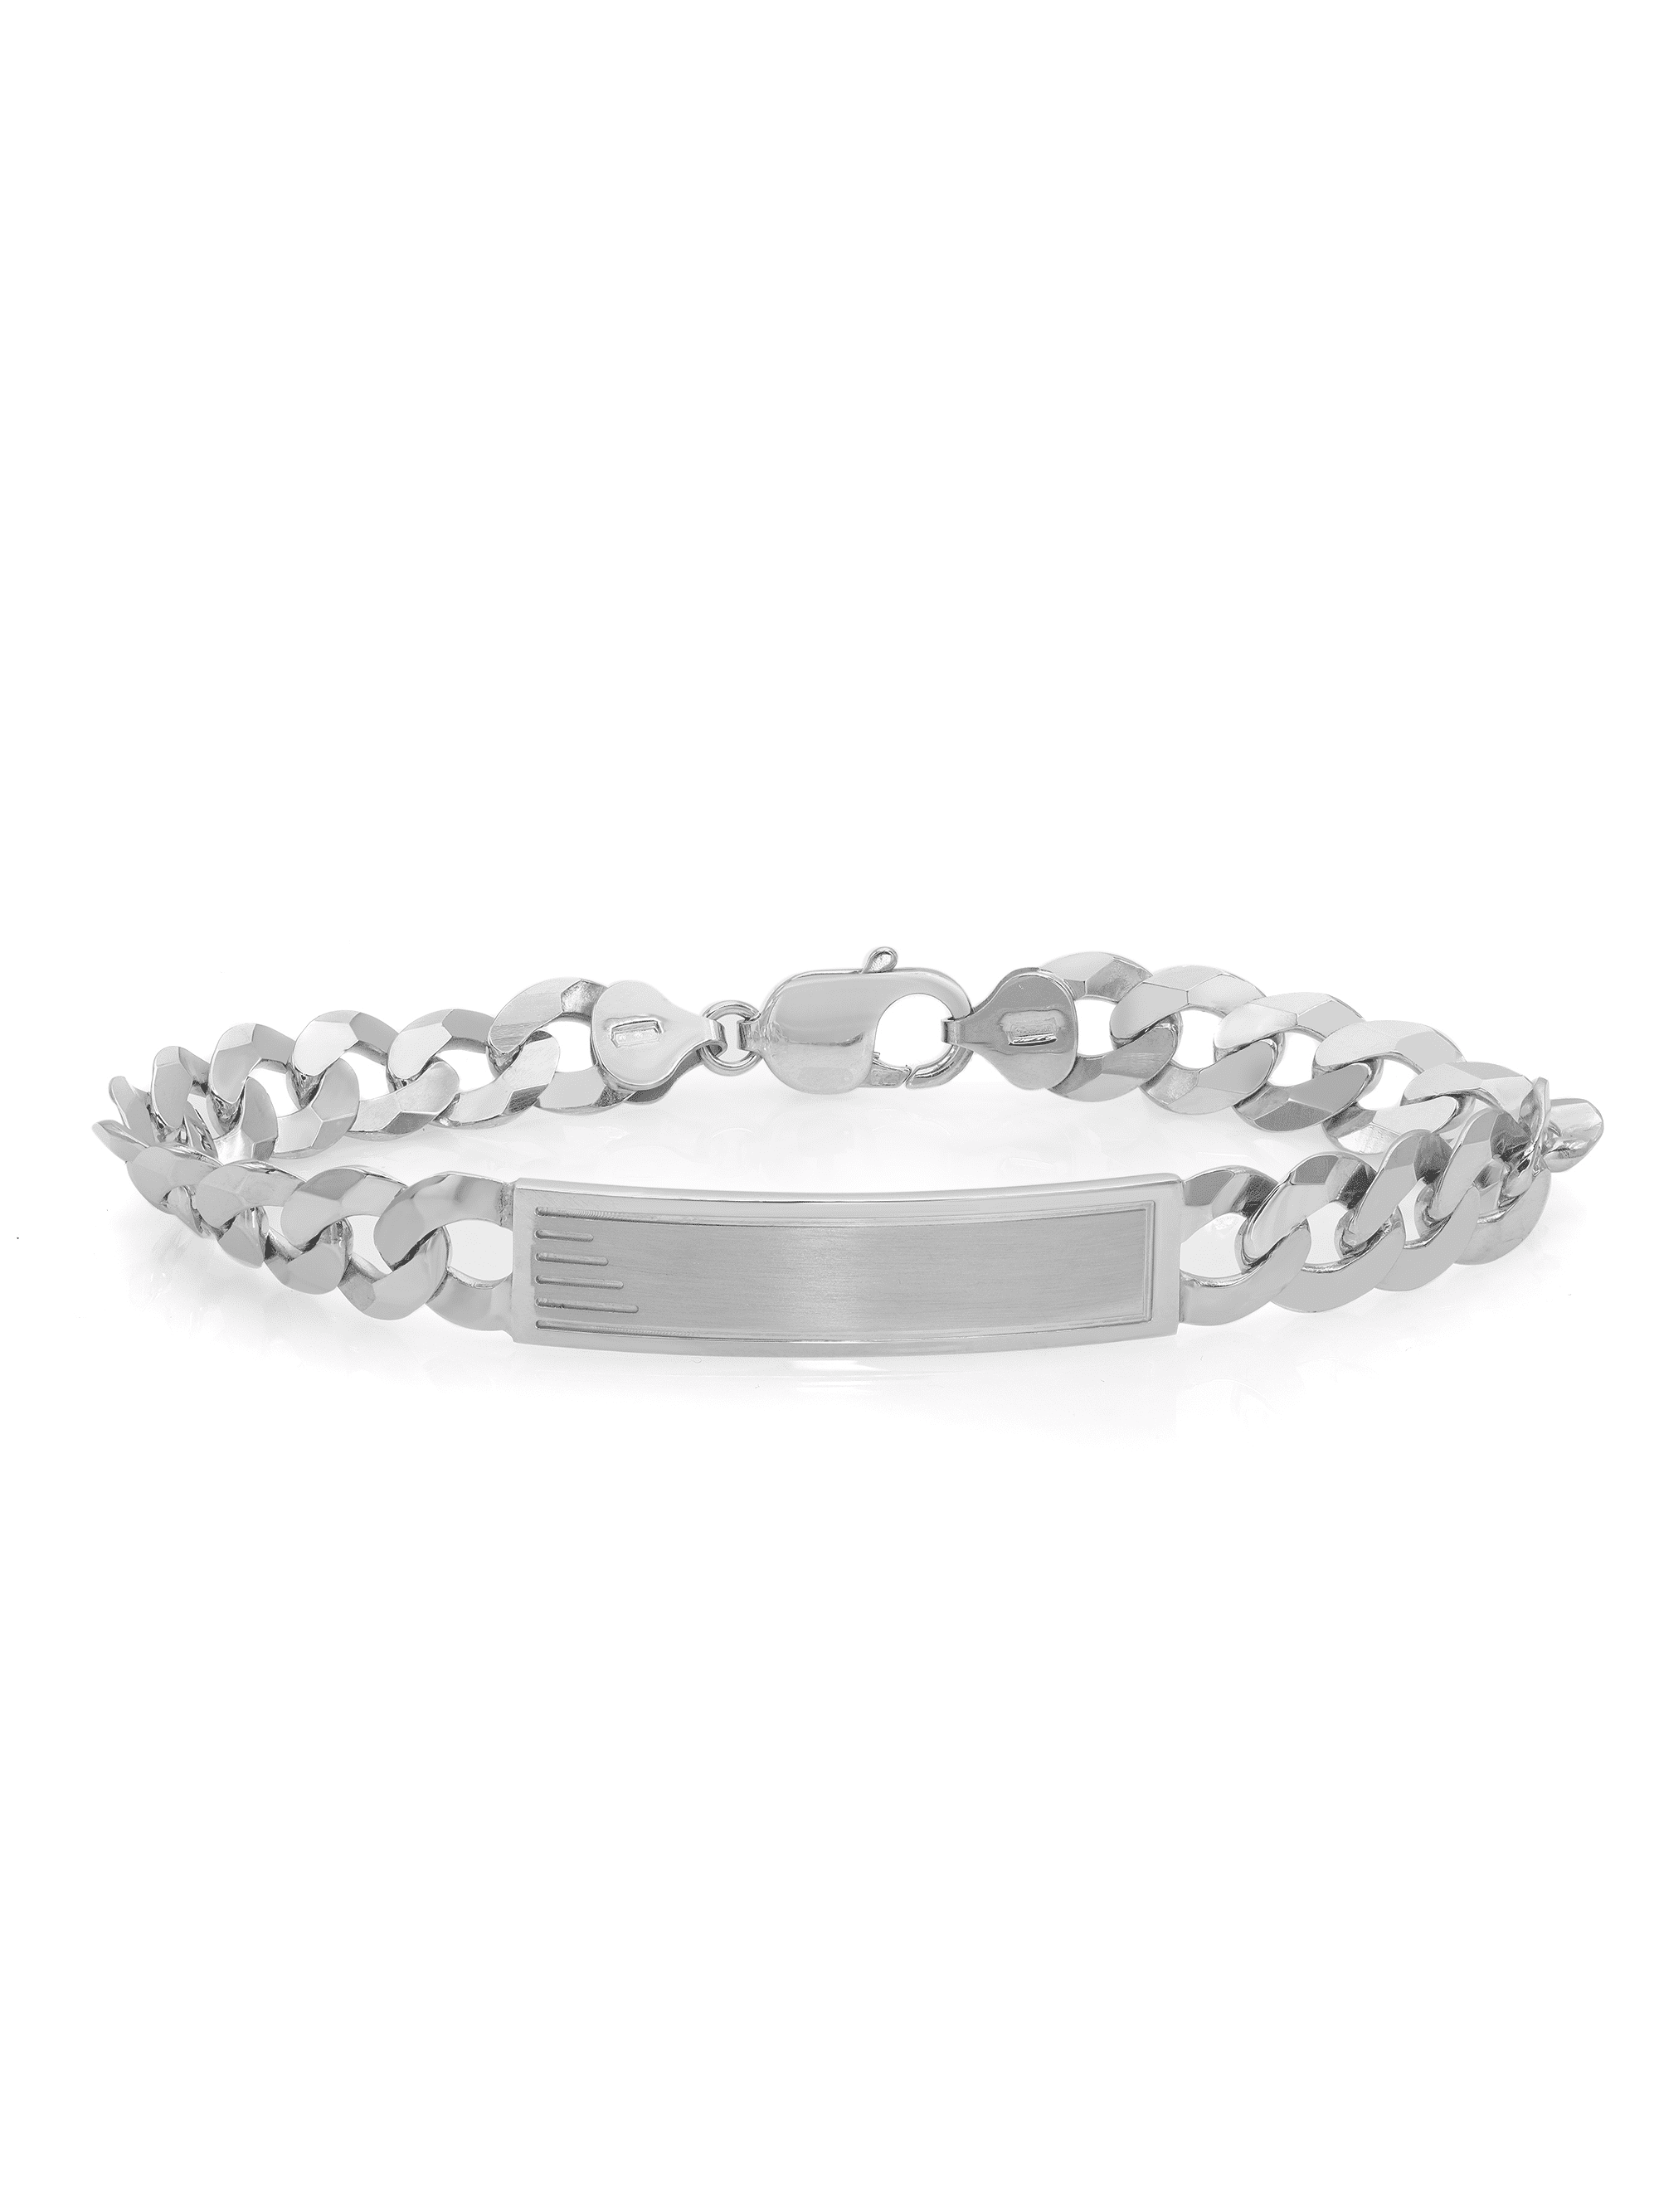 Our Personalised Name Bracelet 🤩... - Sterling Jewellers | Facebook